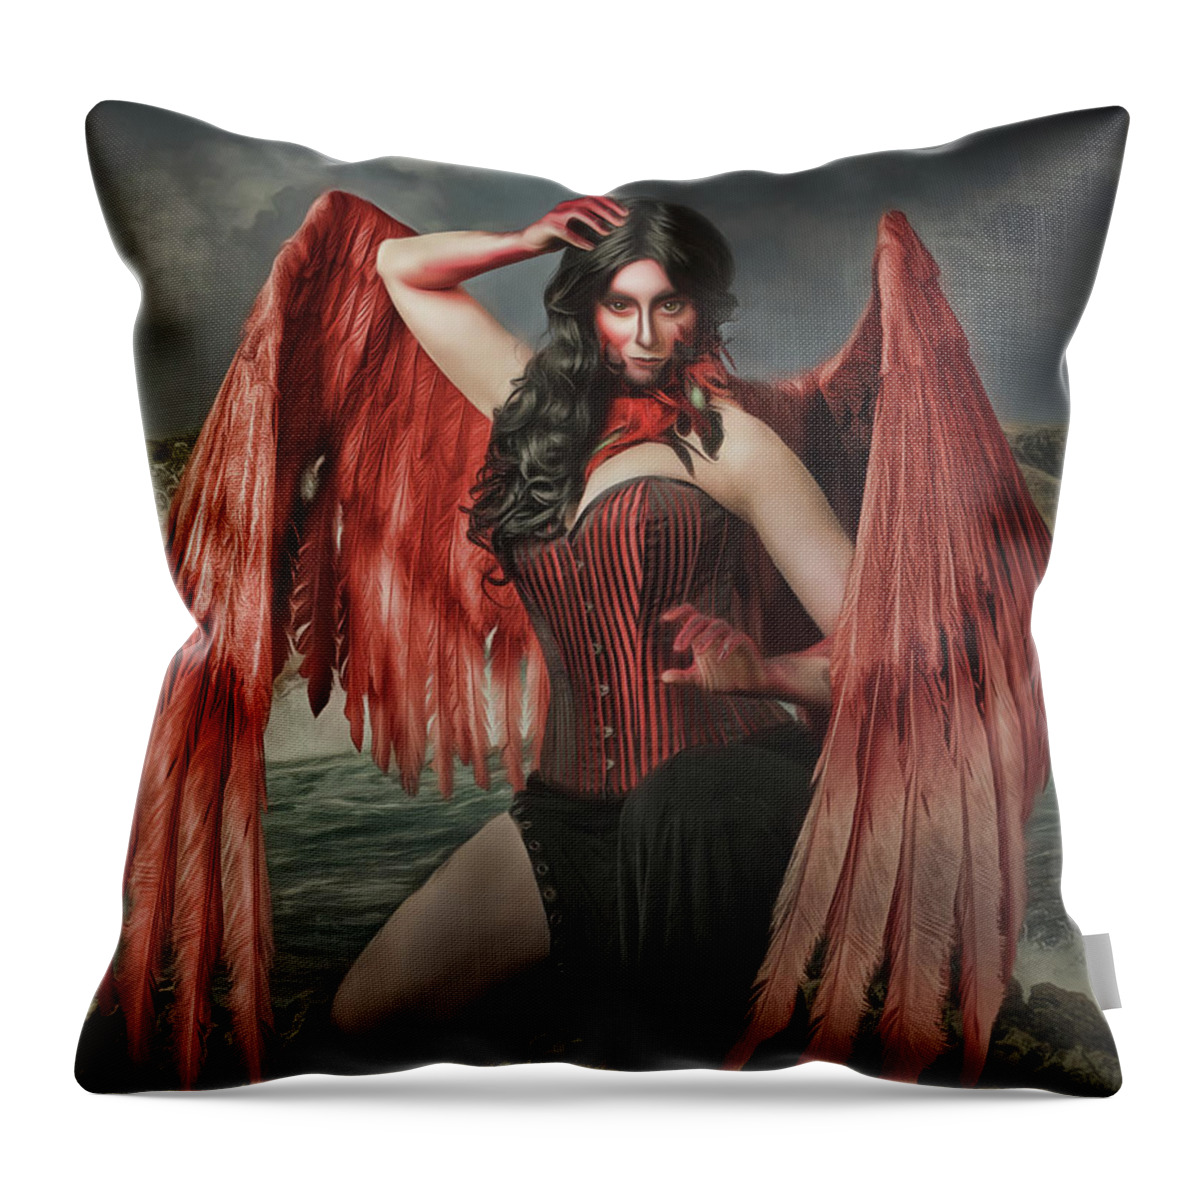 Siren Throw Pillow featuring the digital art Red Siren by Brad Barton